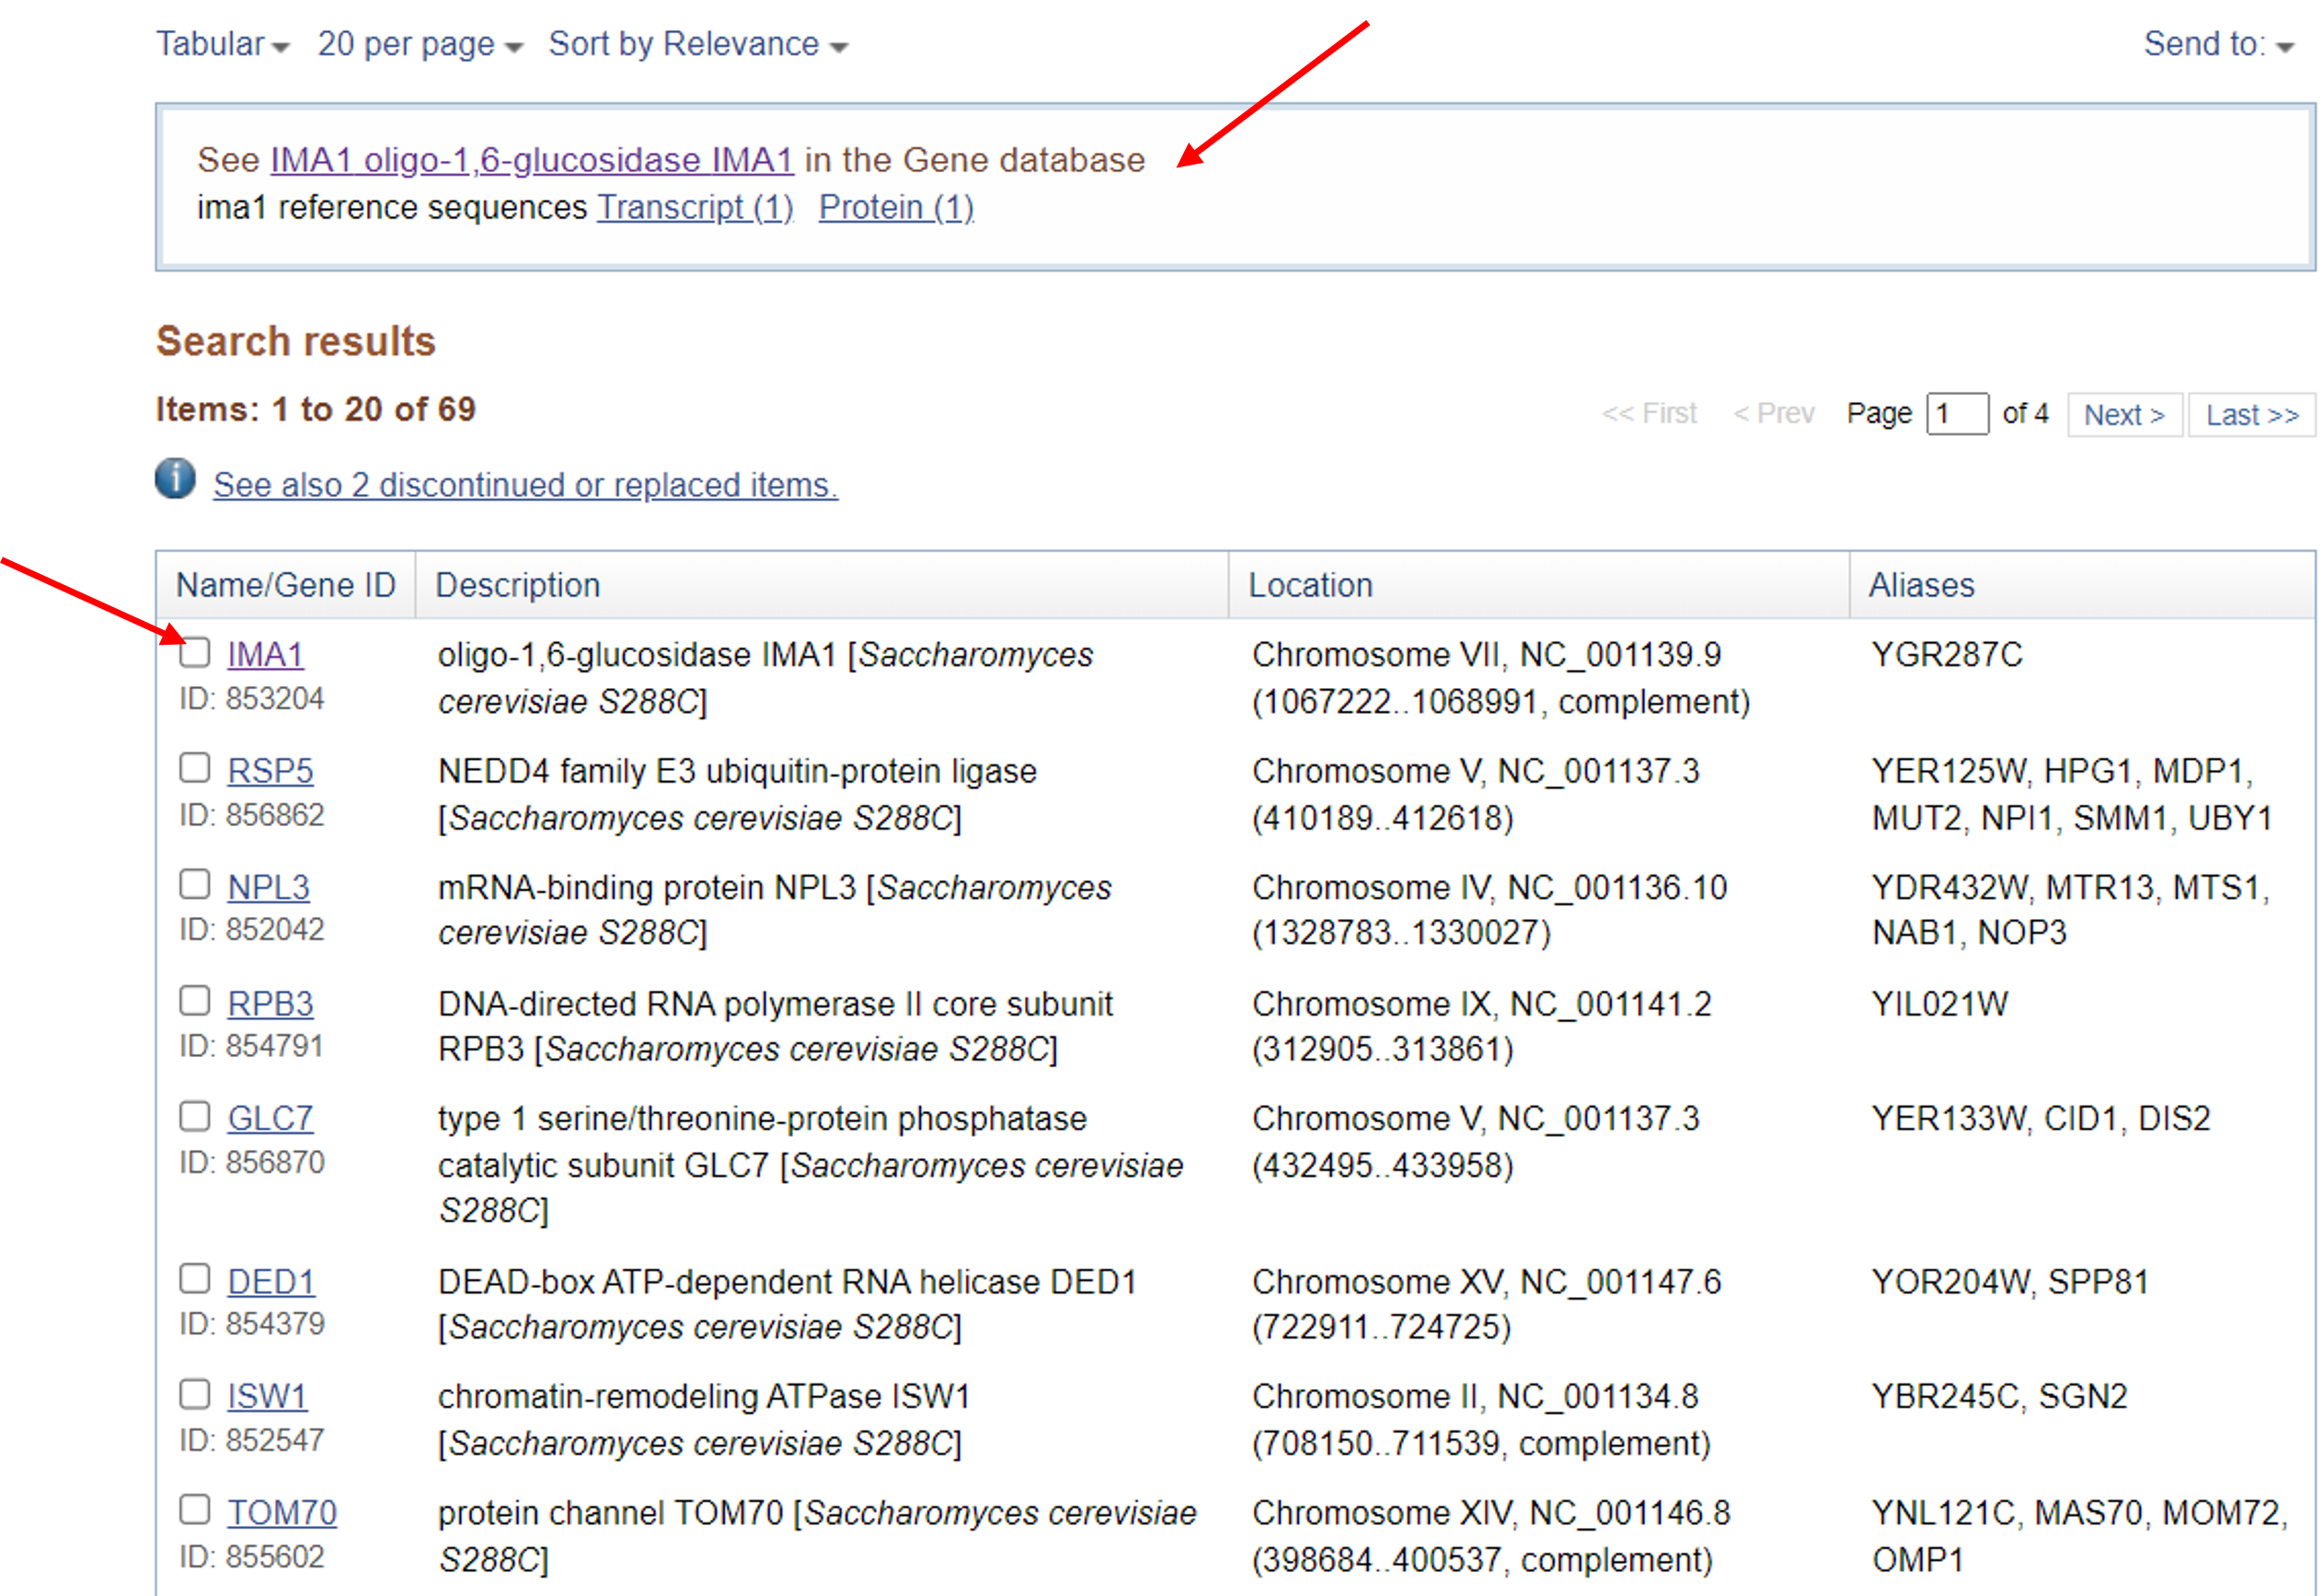 Gene database search results for saccharomyces cerevisiae IMA1 gene